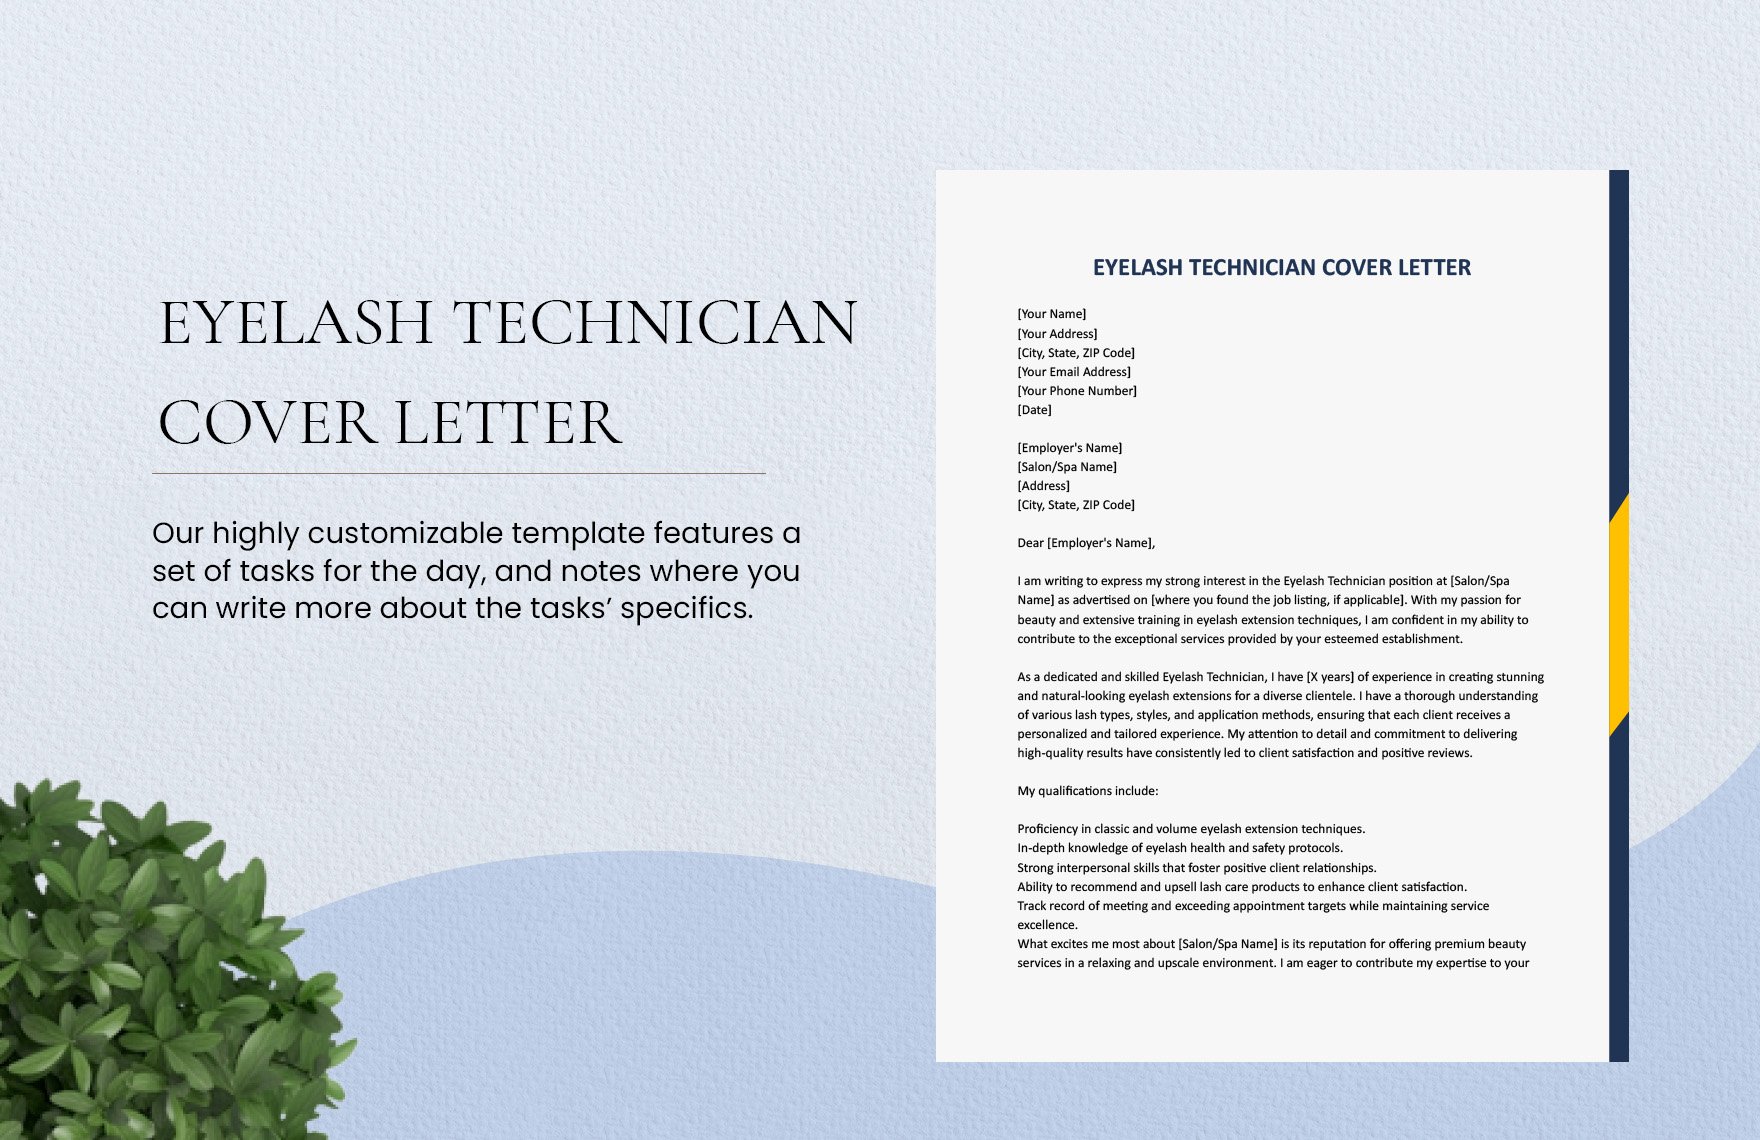 Eyelash Technician Cover Letter in Word, Google Docs